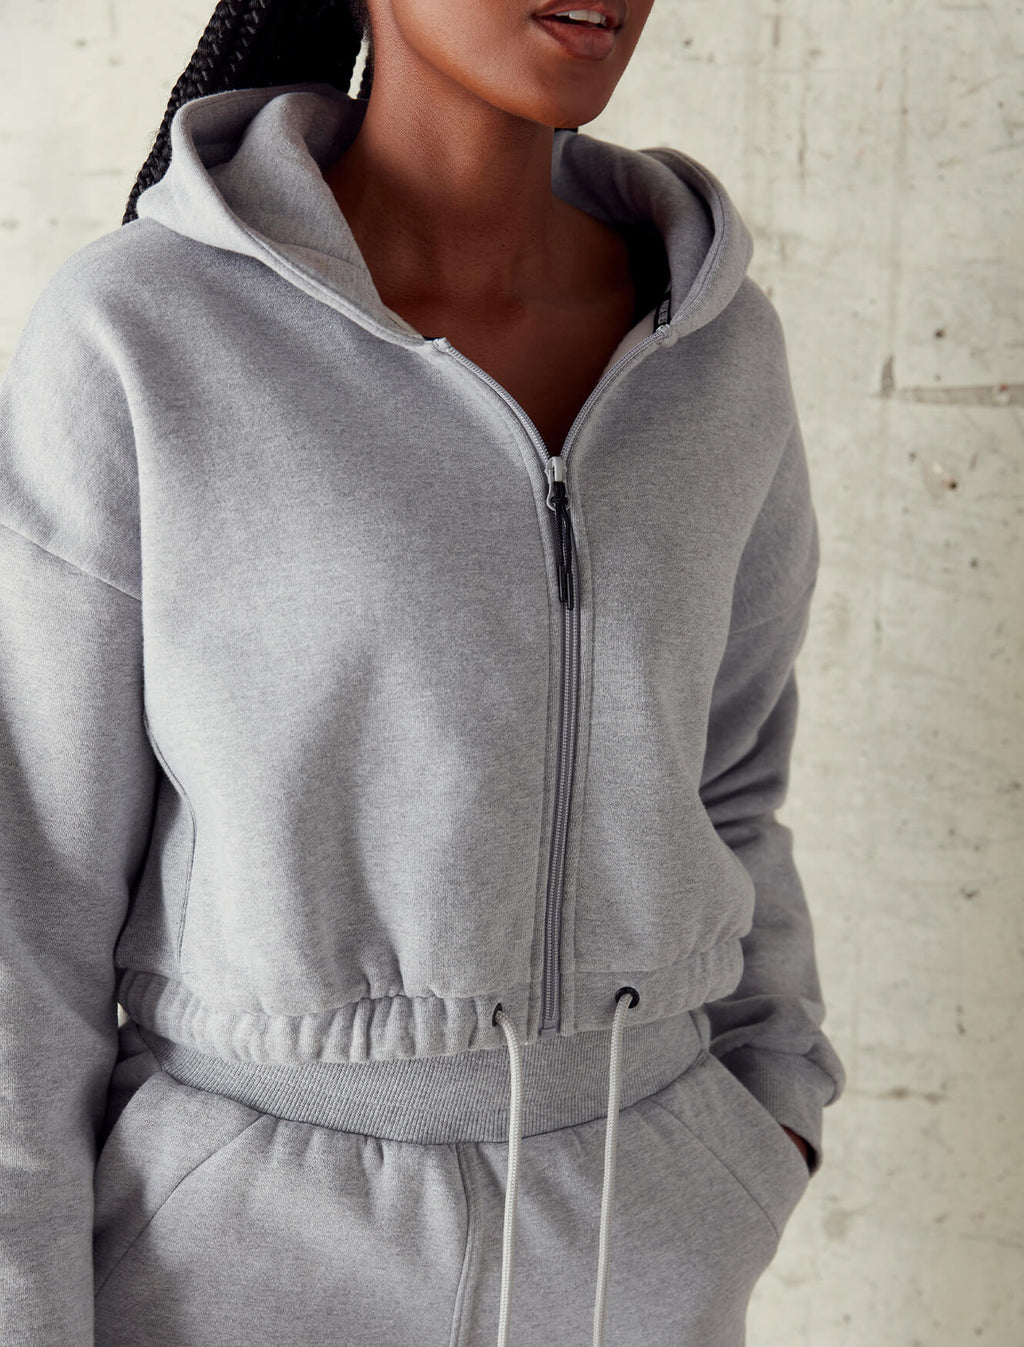 products/womens-select-crop-jacket-grey-marl.jpg